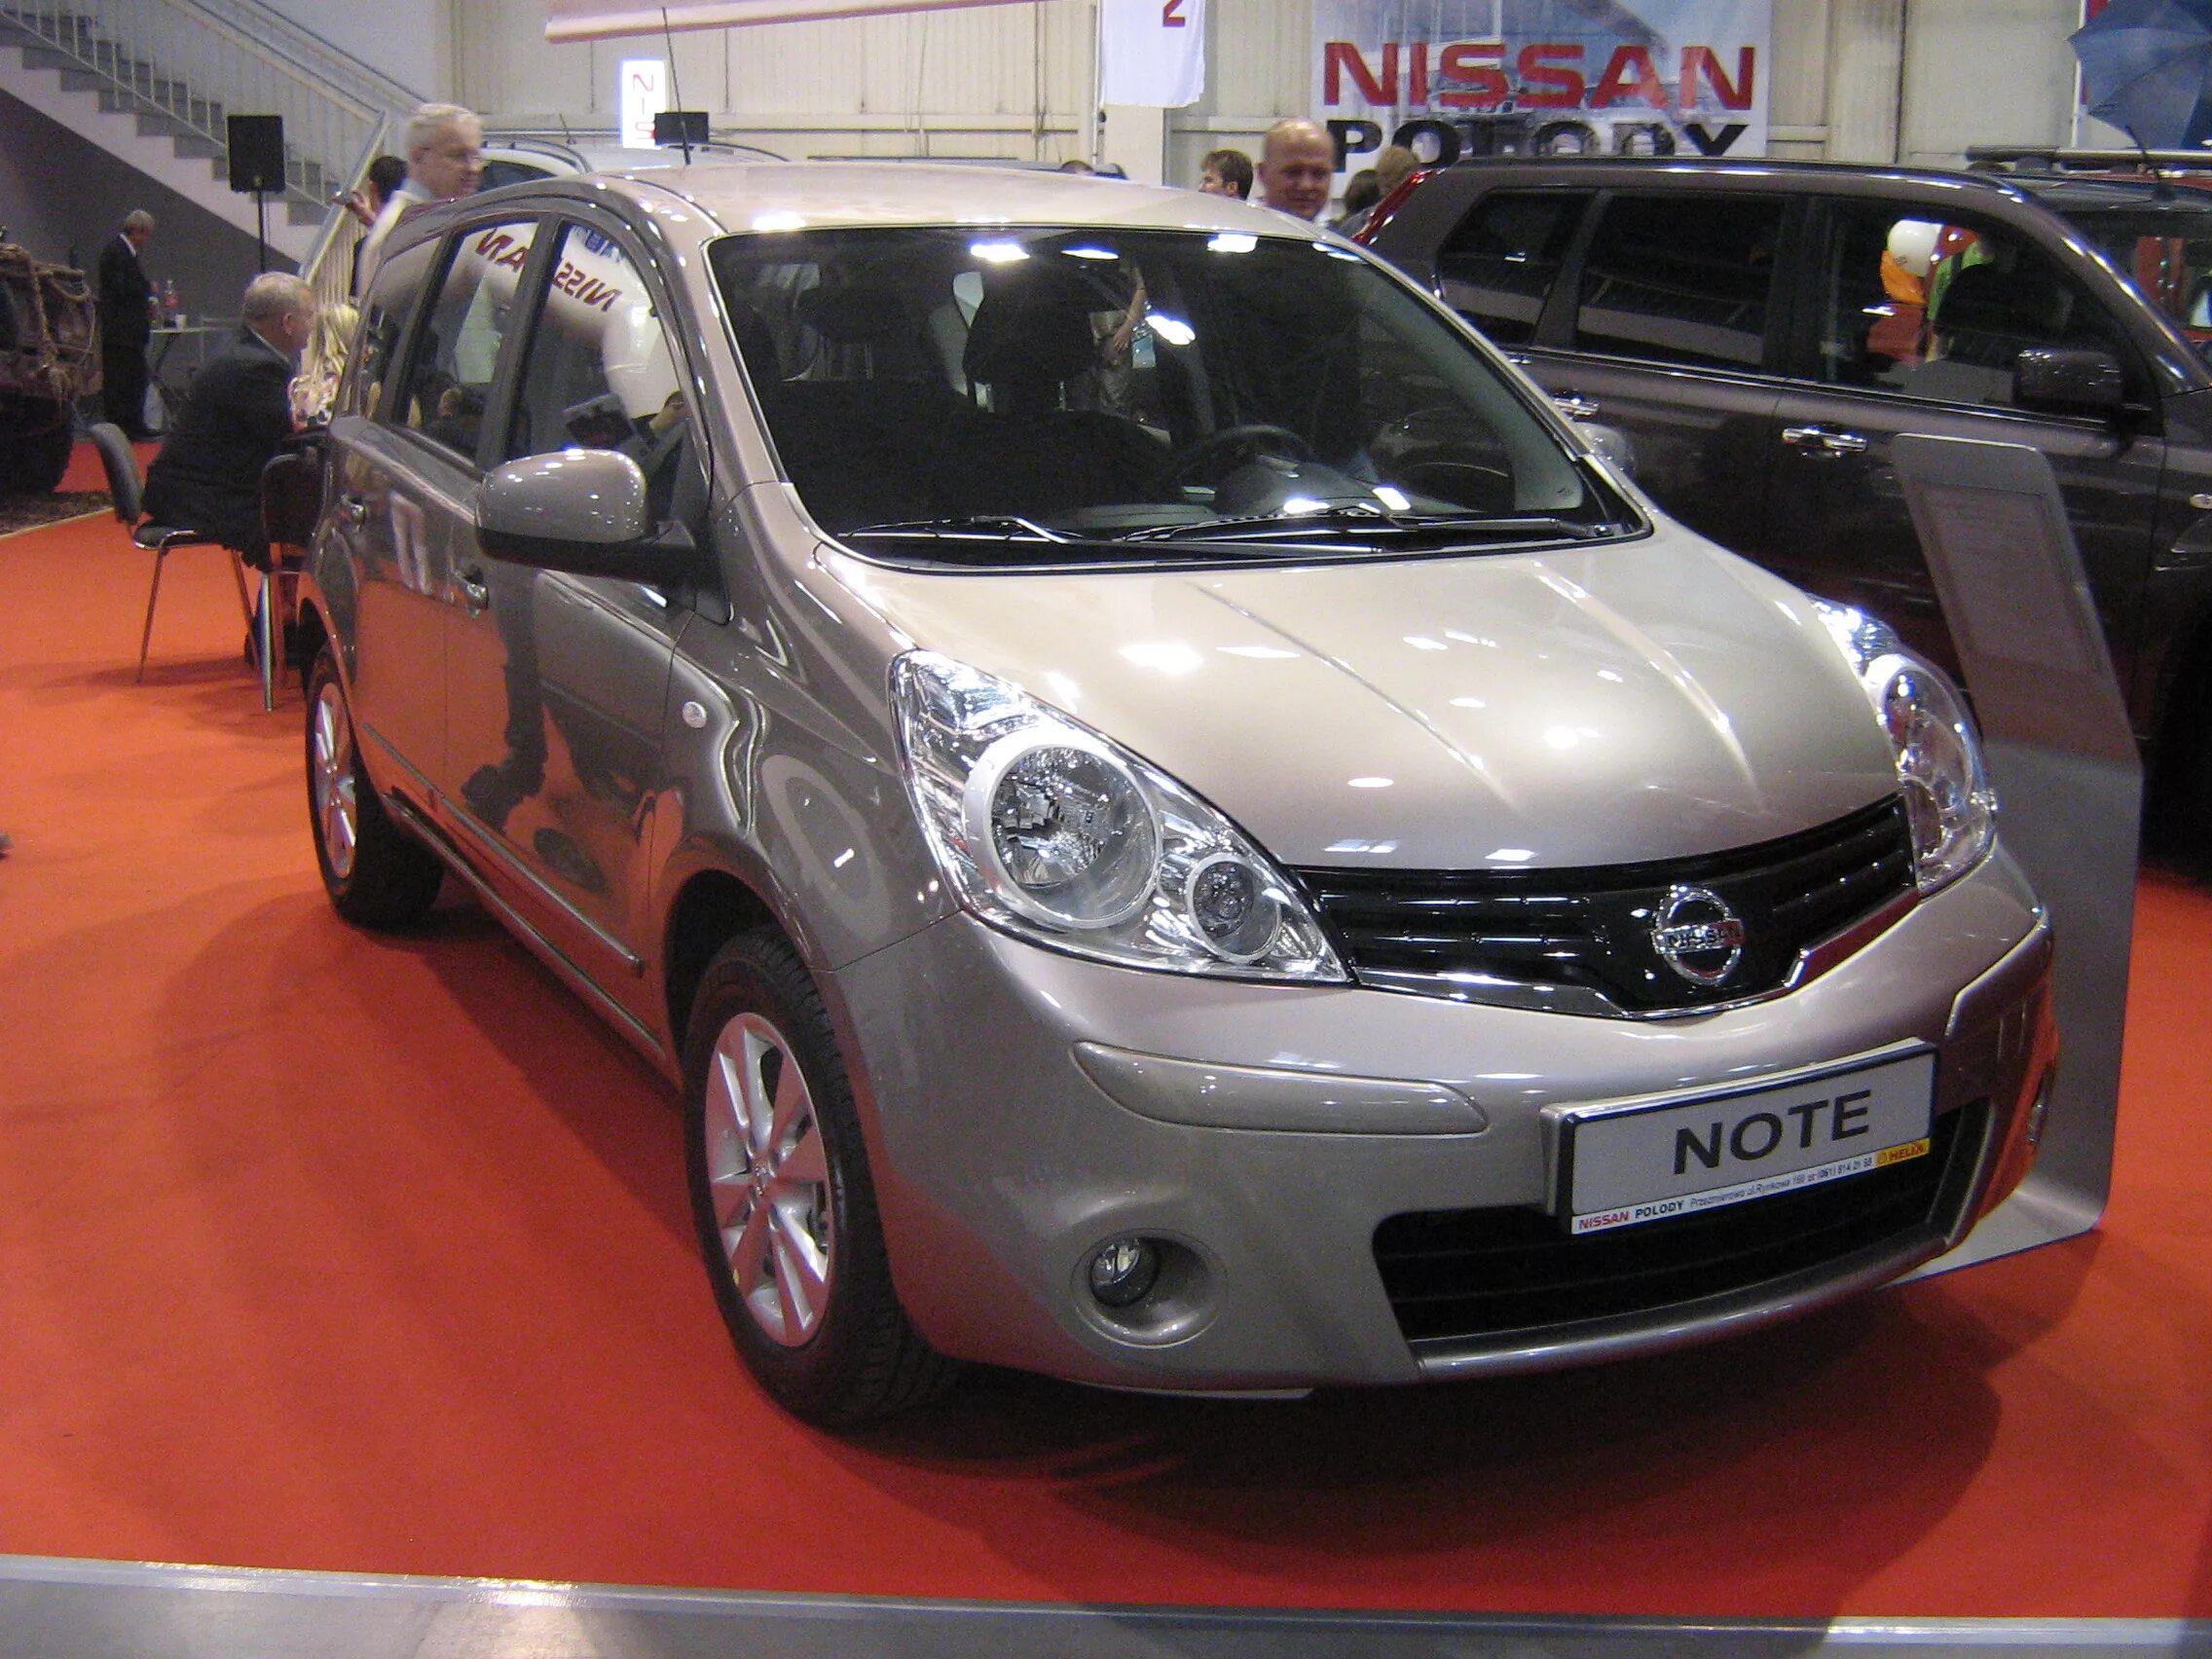 Ниссан нот 4. Nissan Note 2011 1.6. Nissan Note 2009. Nissan Note 1.6 2010. Nissan Note e11 2010.